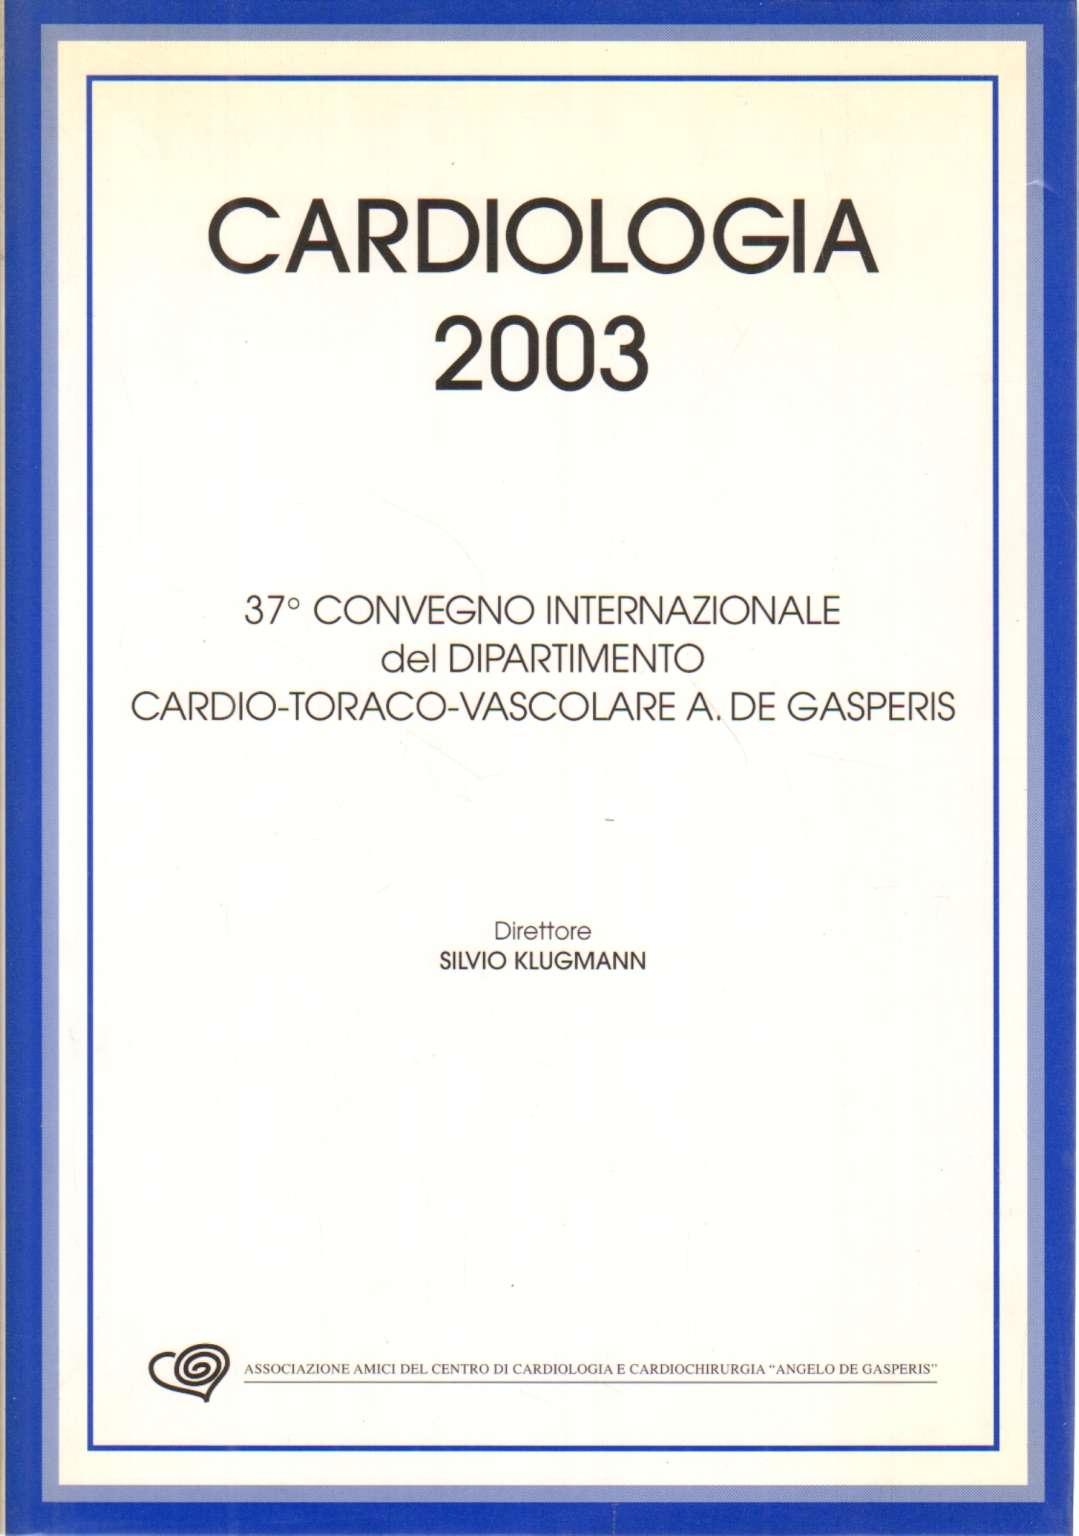 Cardiology, 2003, AA.VV.